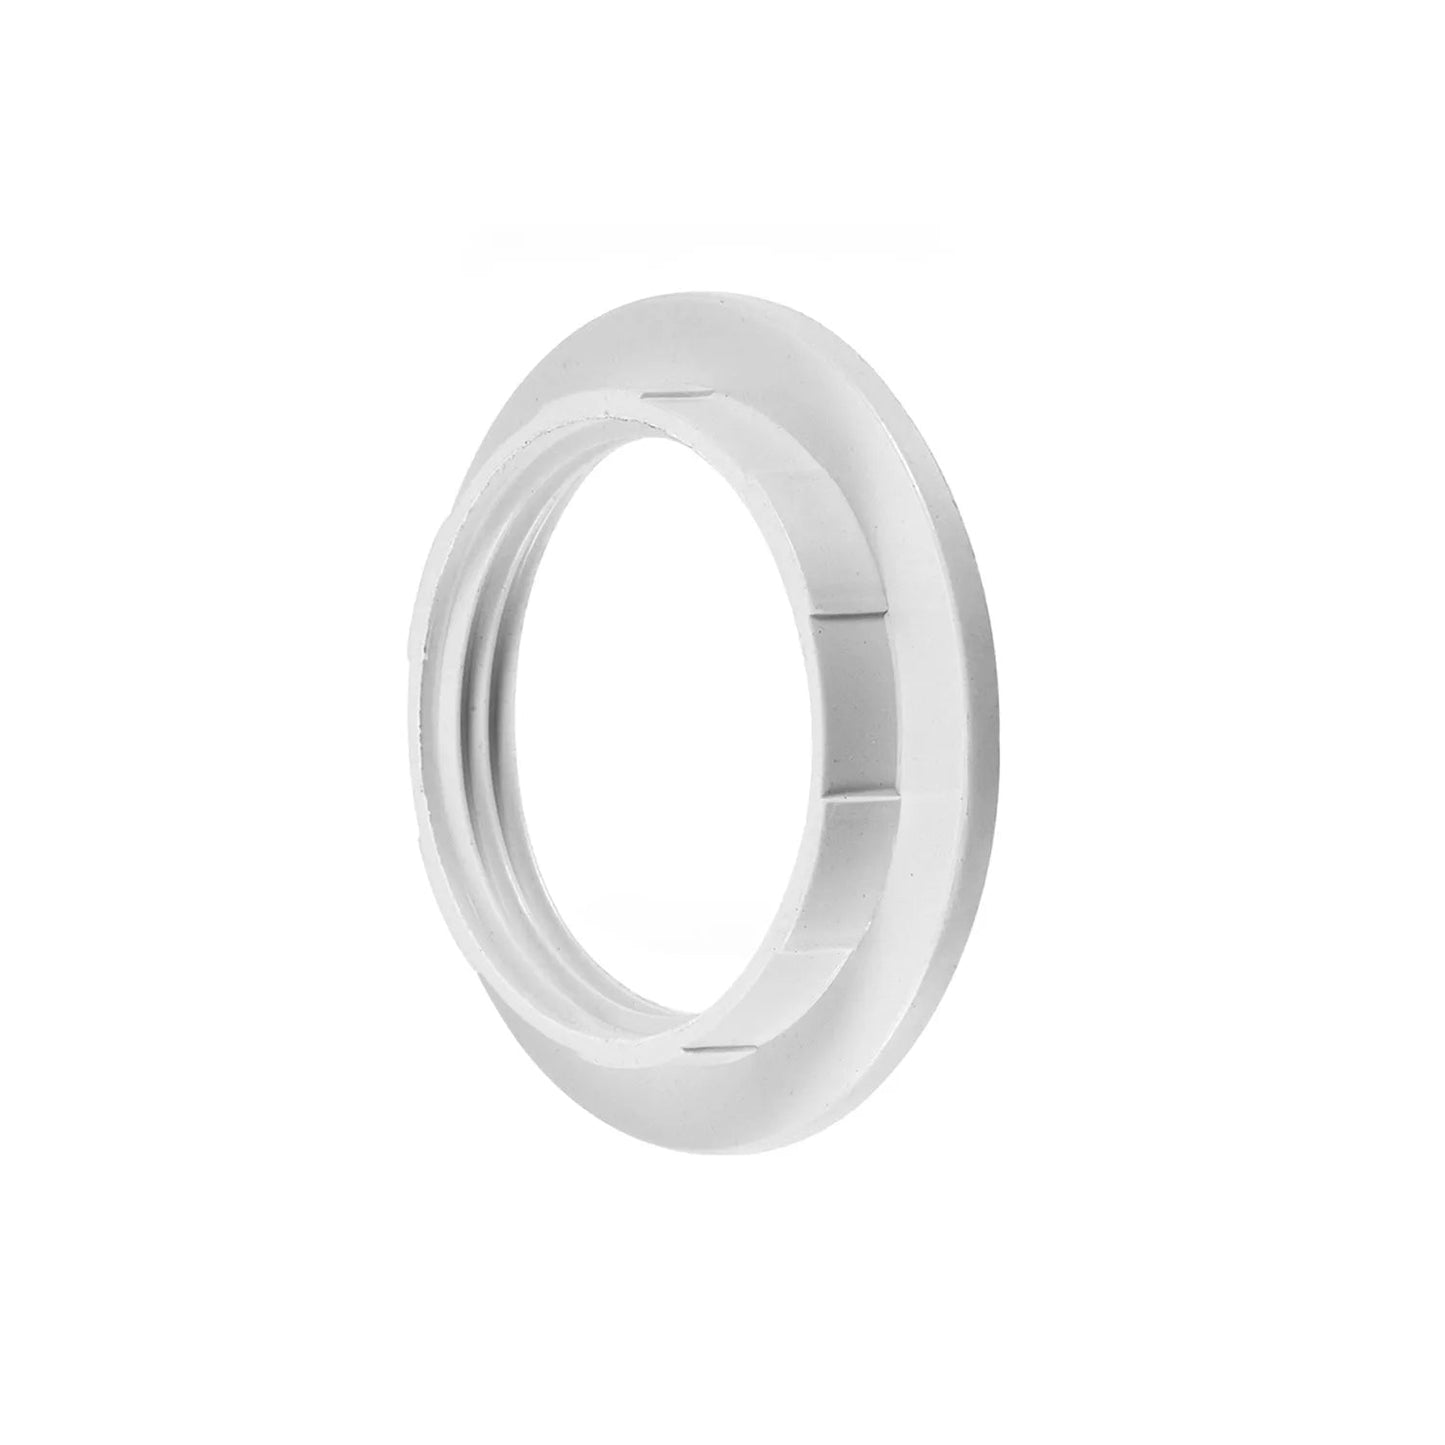 Black or White E14/ E27 Lampshade Collar Ring 2 Pack~1753